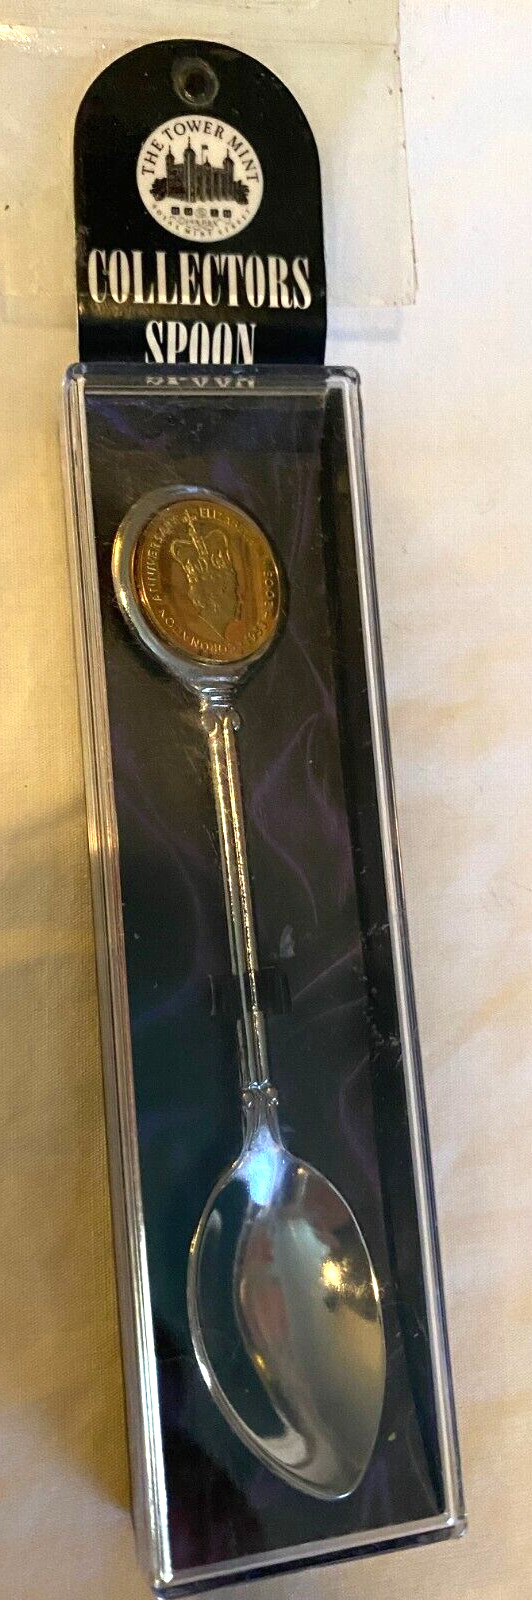 Queen Elizabeth II 50th Anniversary souvenir collectors spoon, mint in box